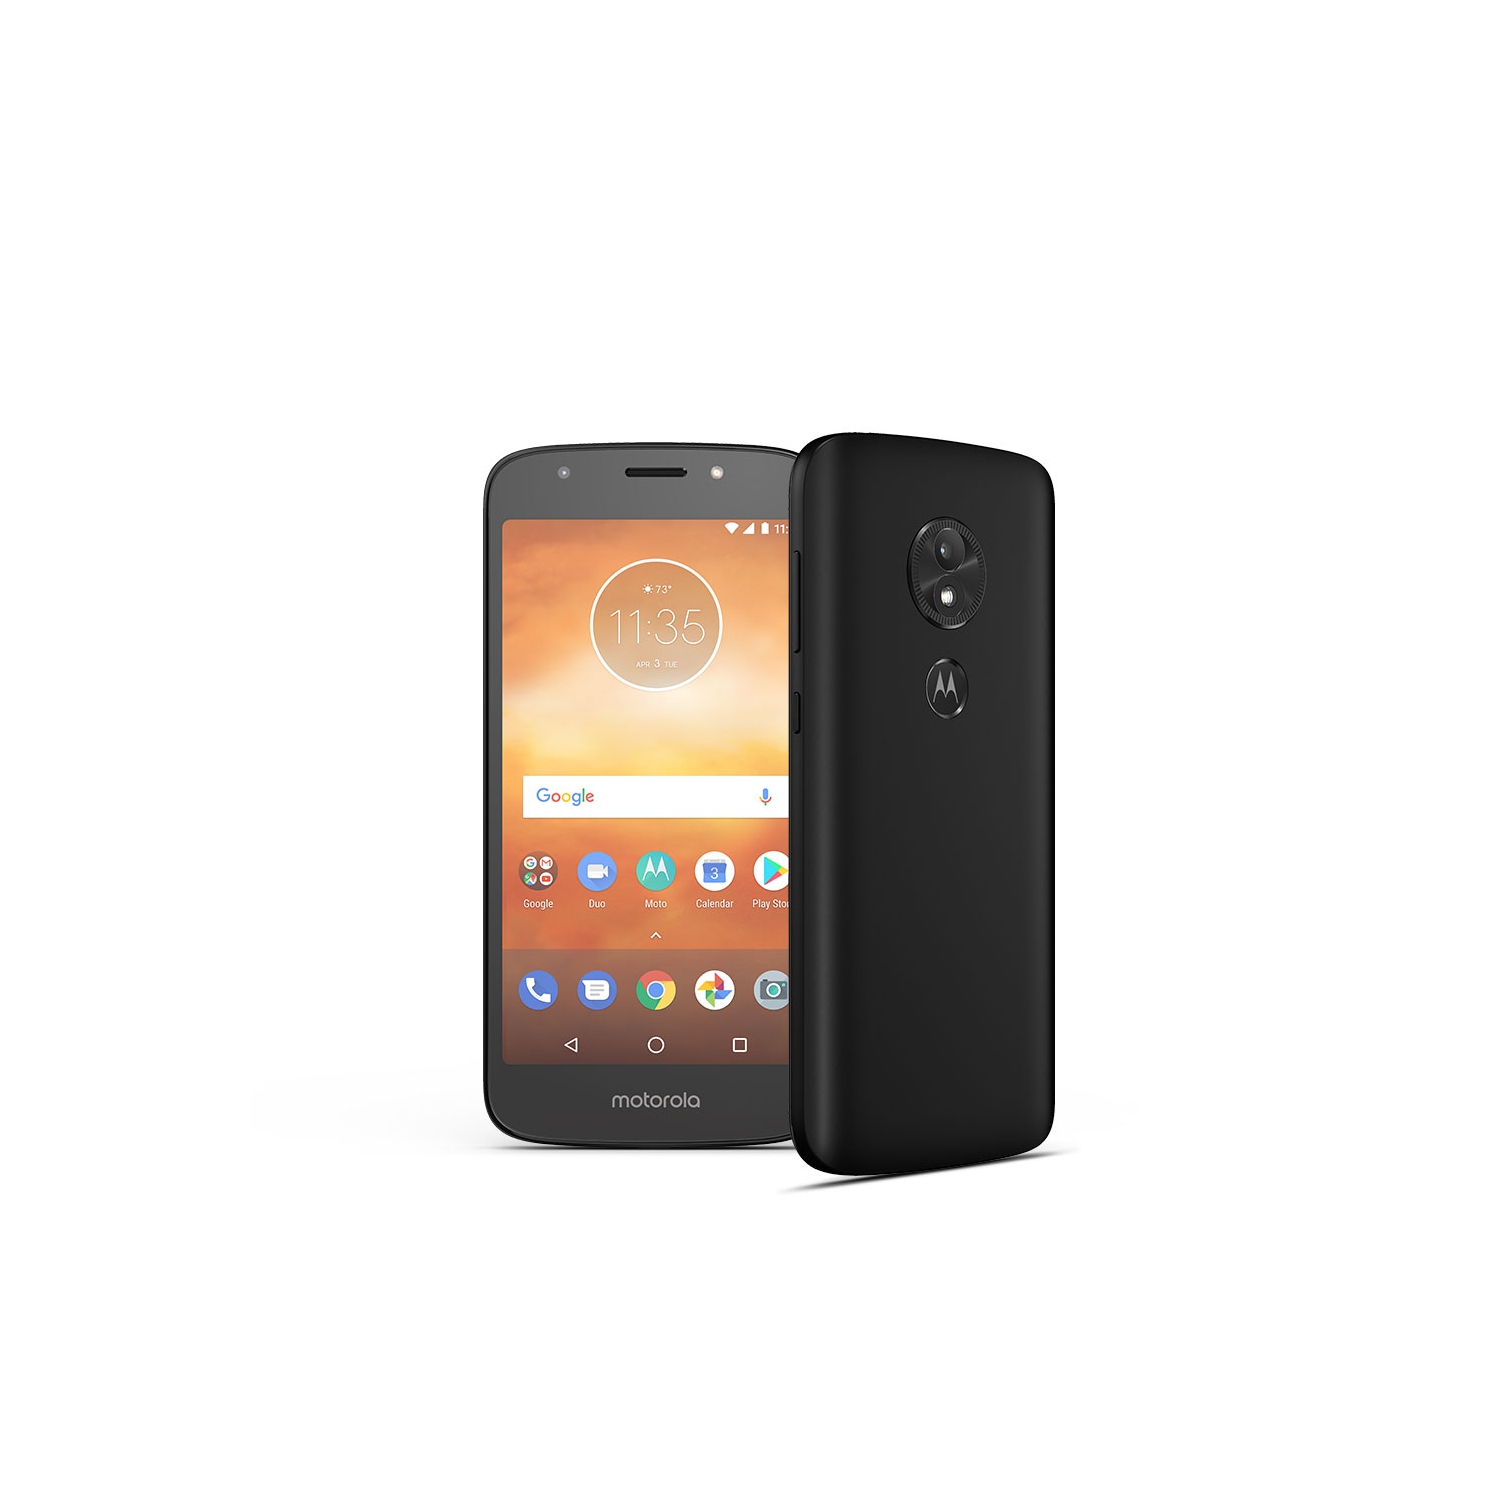 Refurbished (Good) - Motorola Moto E5 Play - Black - 16GB - Unlocked